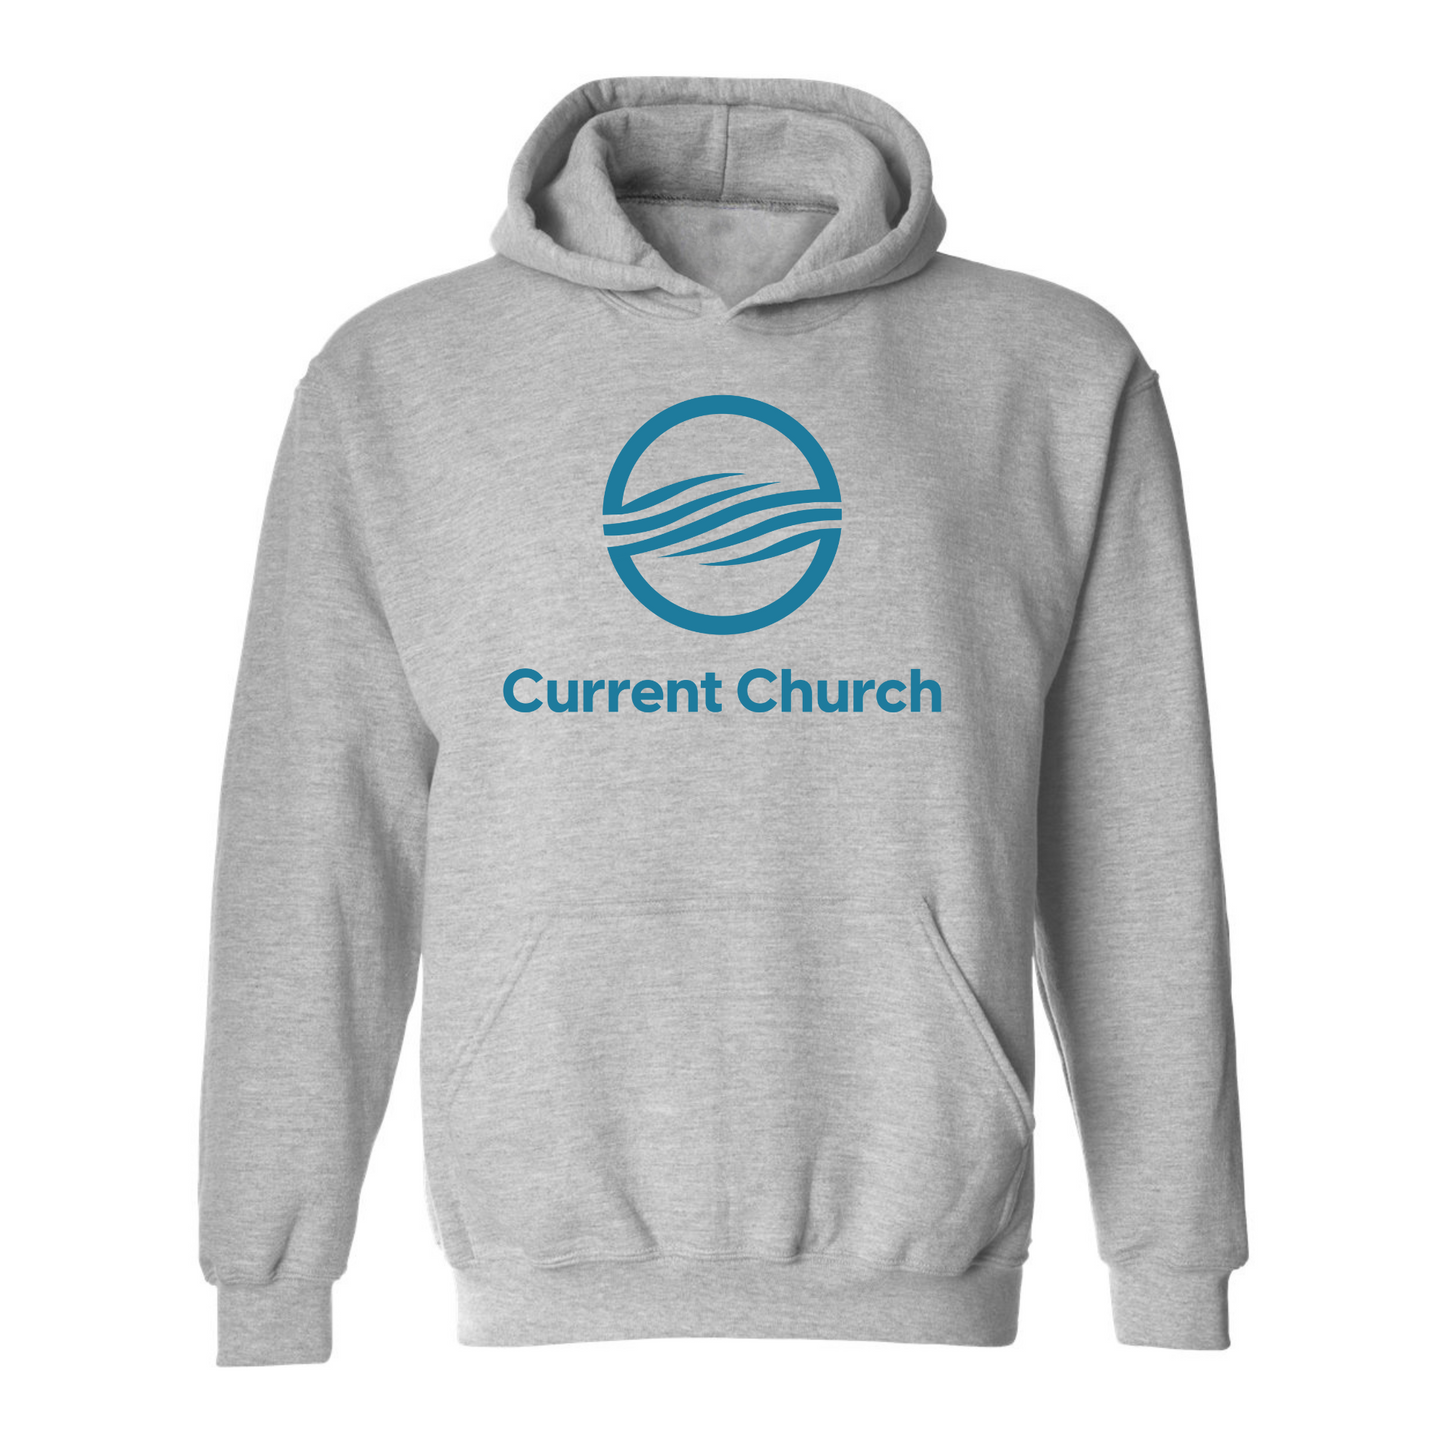 Current Church Grey Hoodie